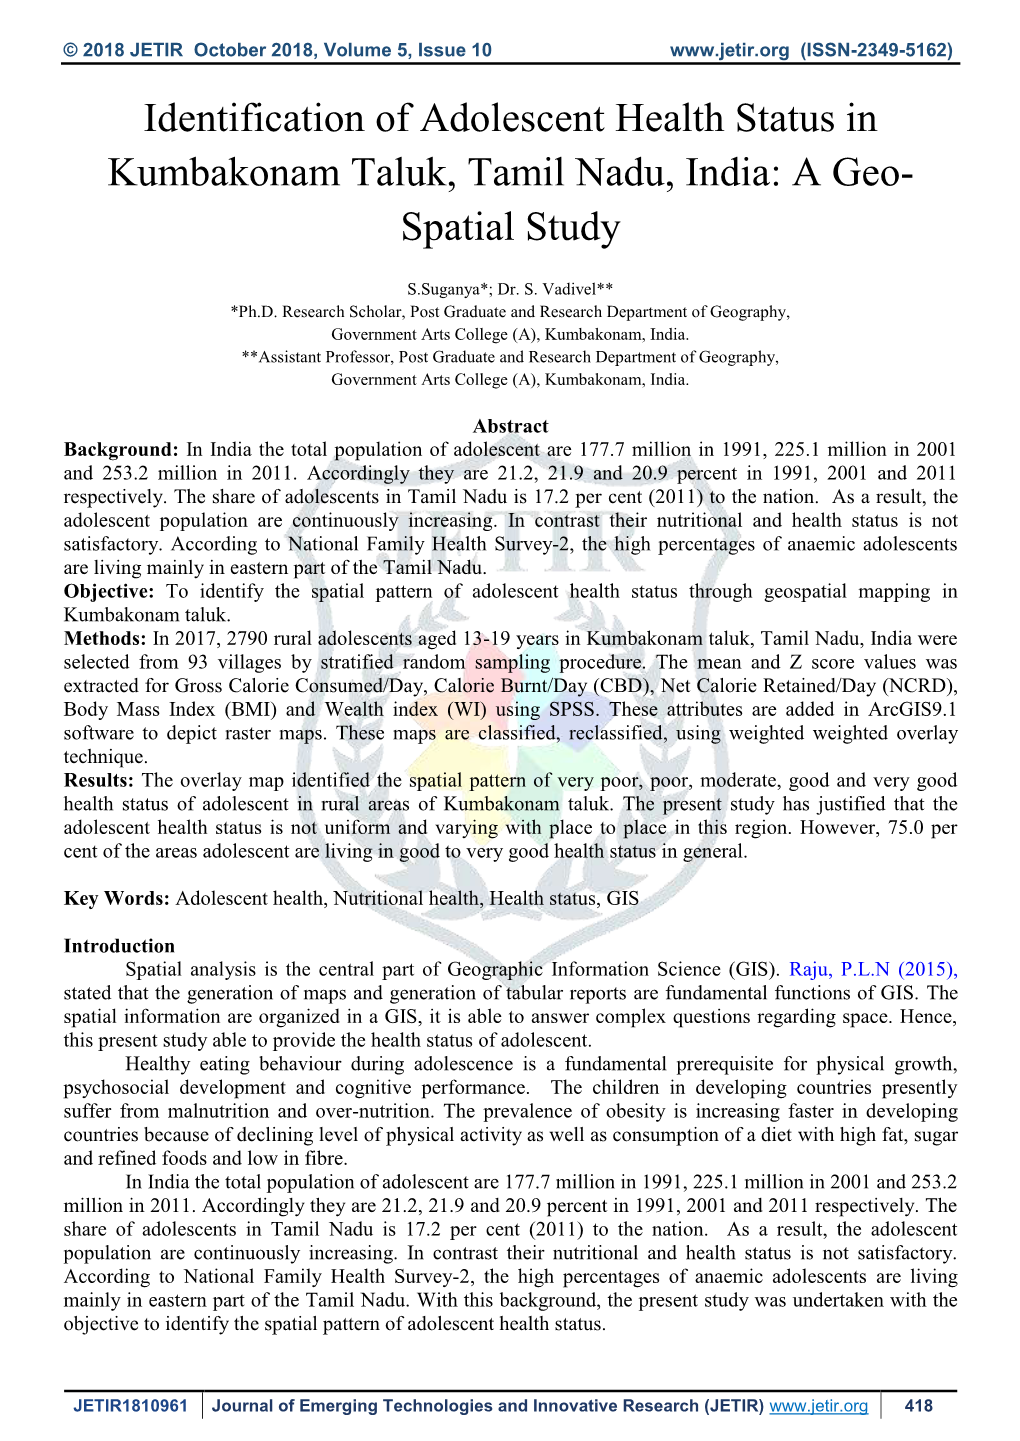 Identification of Adolescent Health Status in Kumbakonam Taluk, Tamil Nadu, India: a Geo- Spatial Study